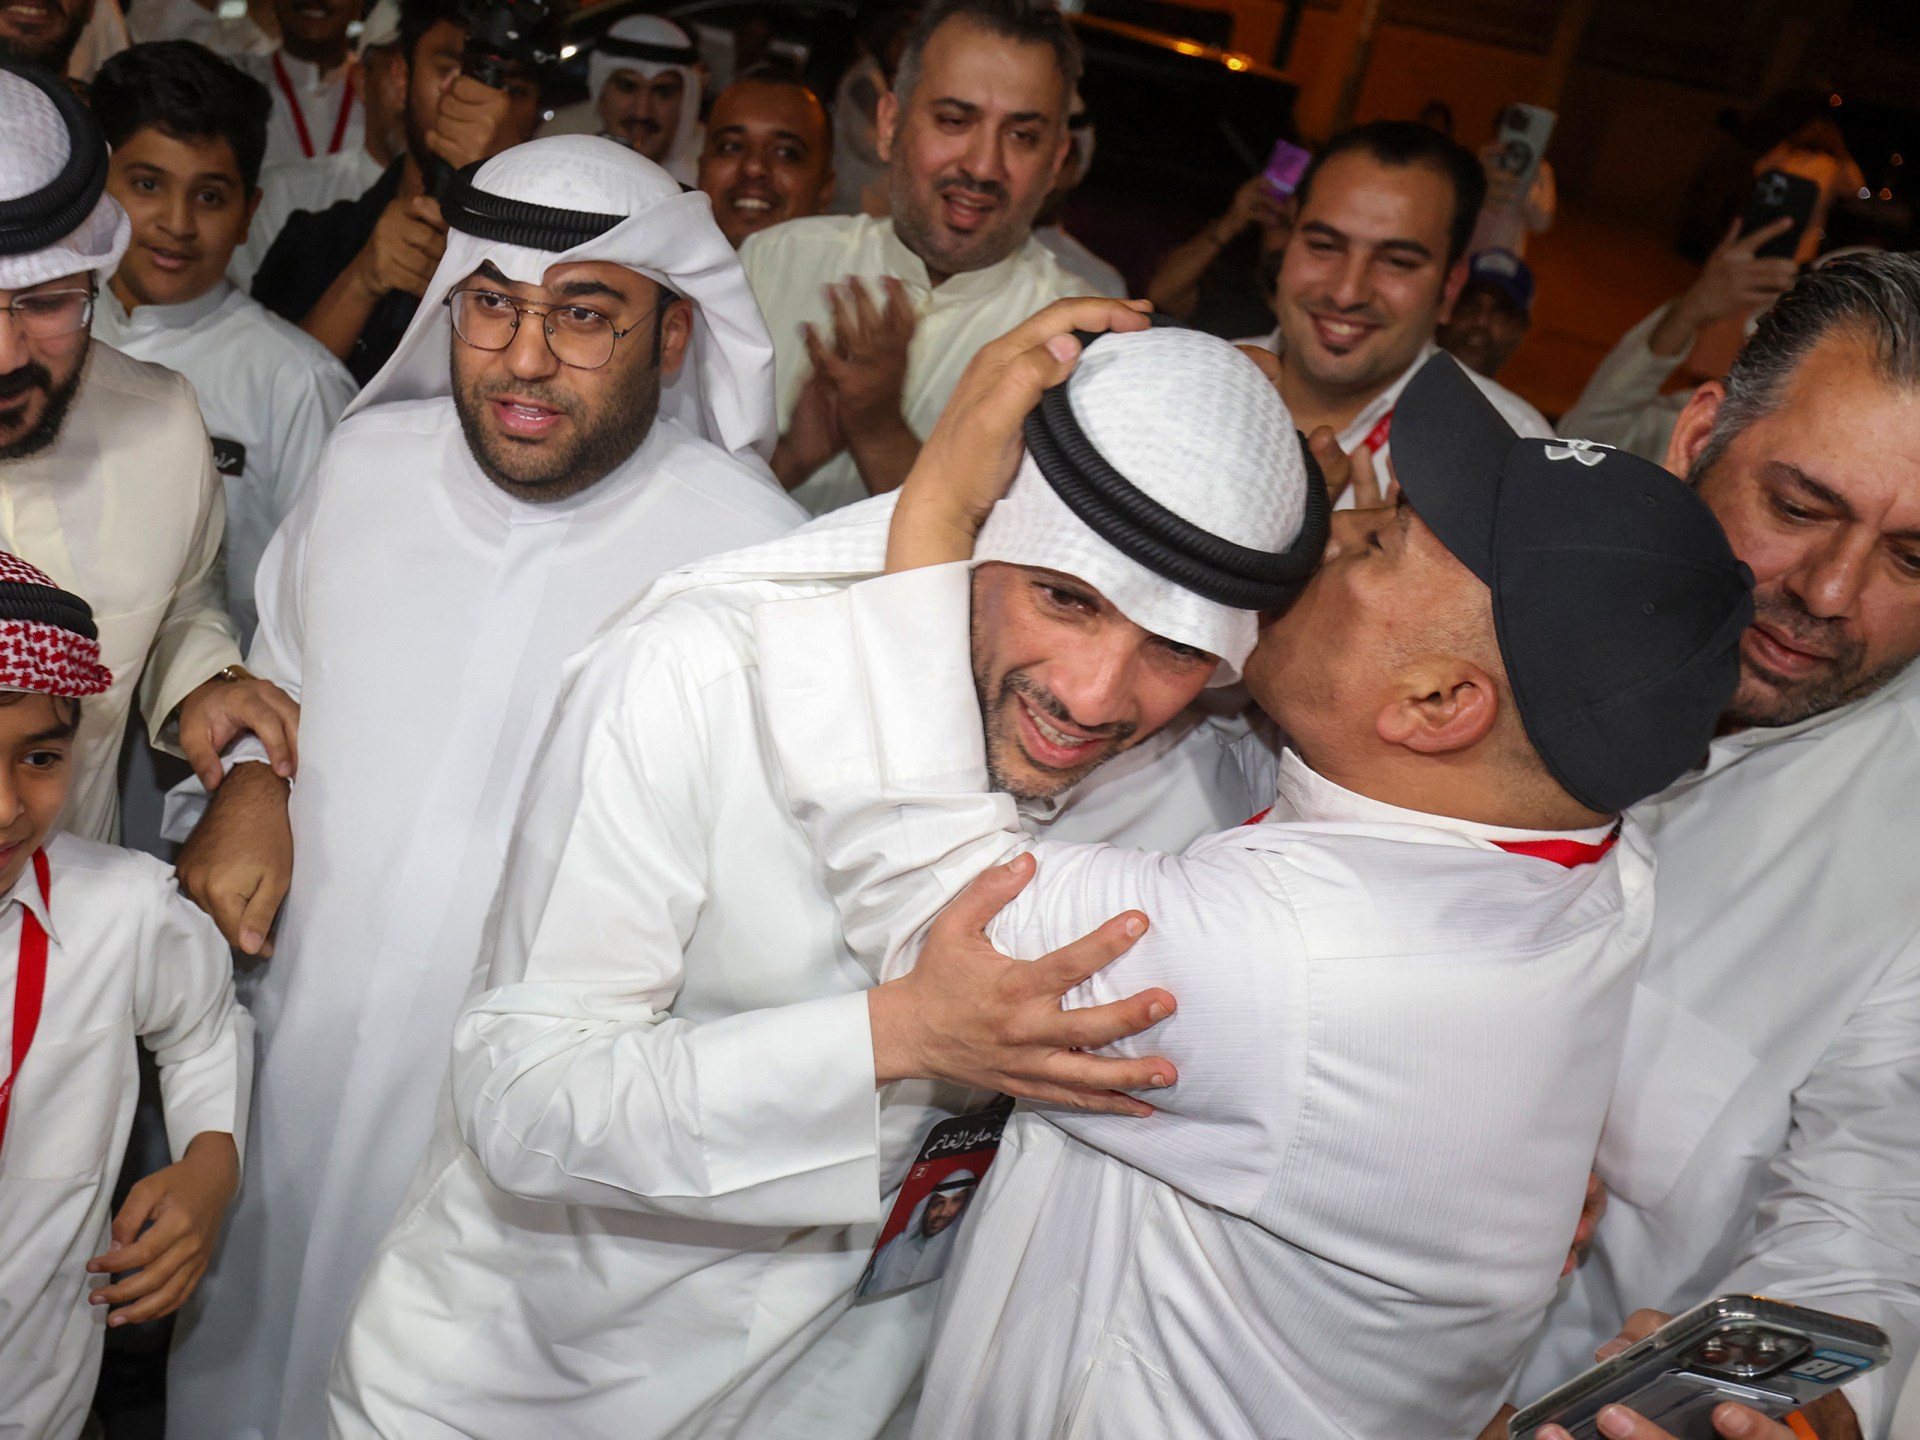 Few changes after Kuwait holds first parliamentary election under new emir | Politics News [Video]